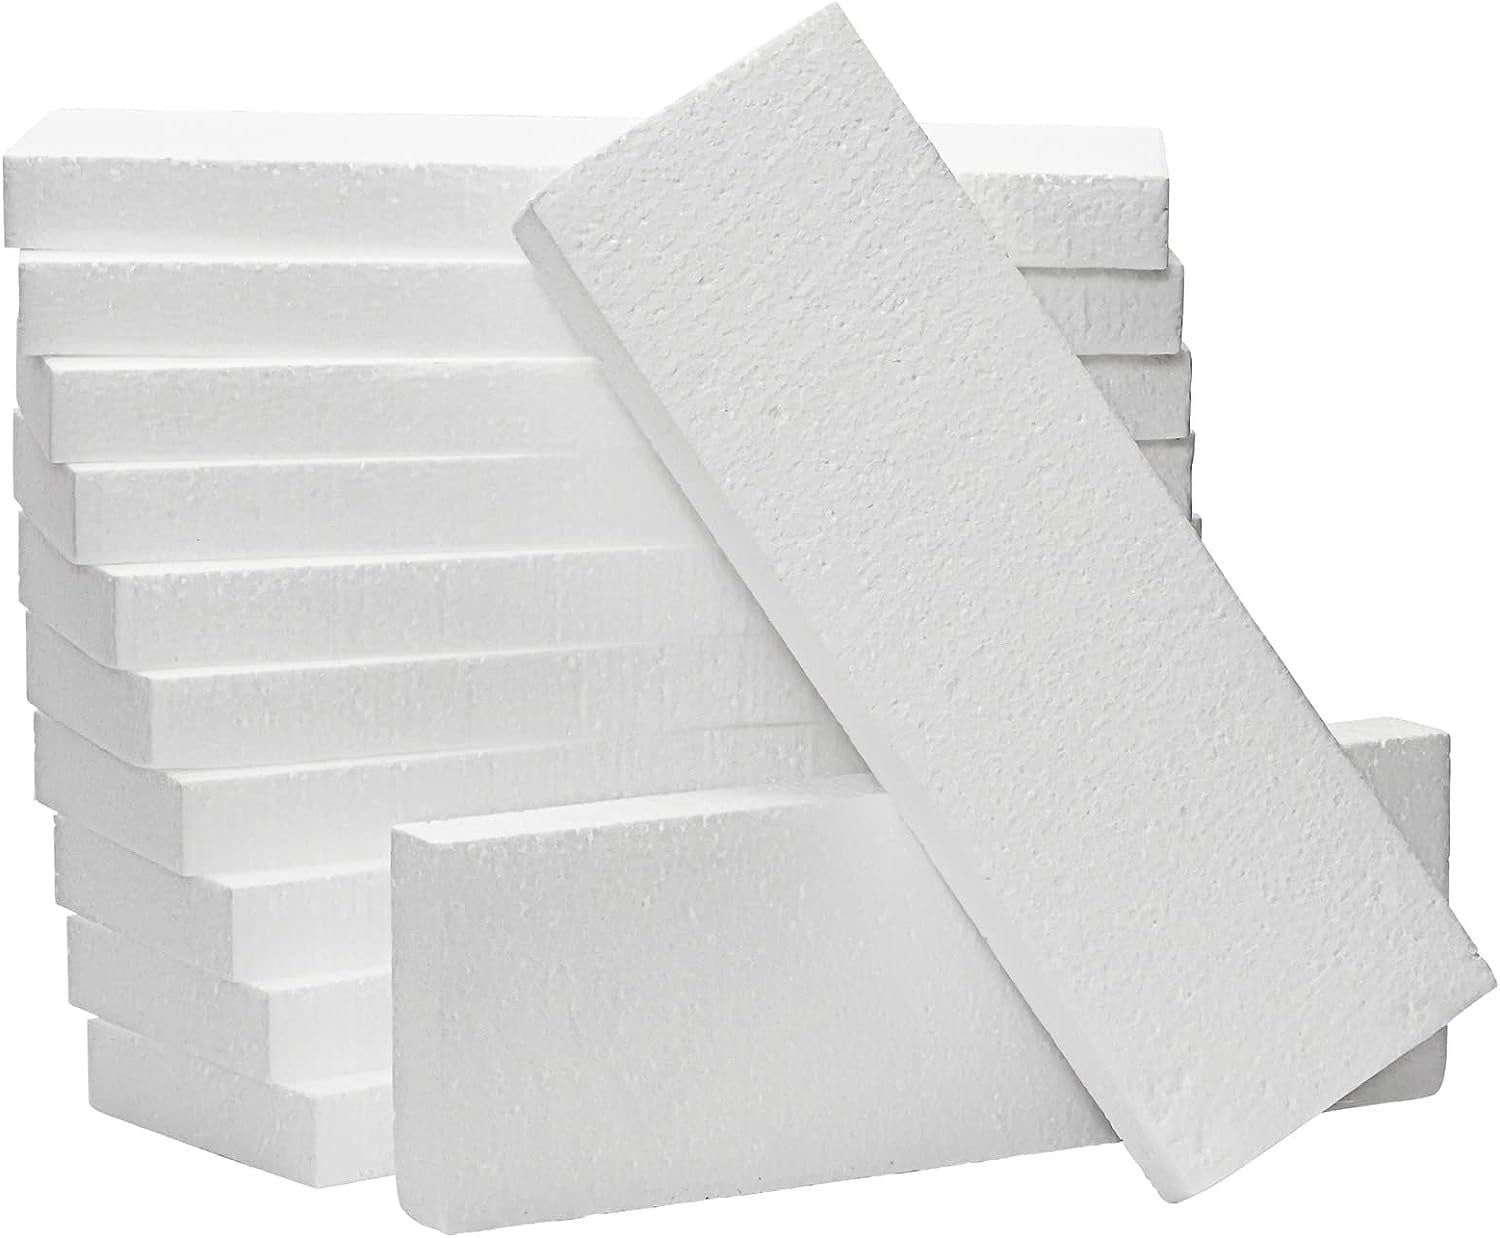 Foam Sheets for Crafts 7.87 x 3.94 x 3.94 Inch Polystyrene Foam